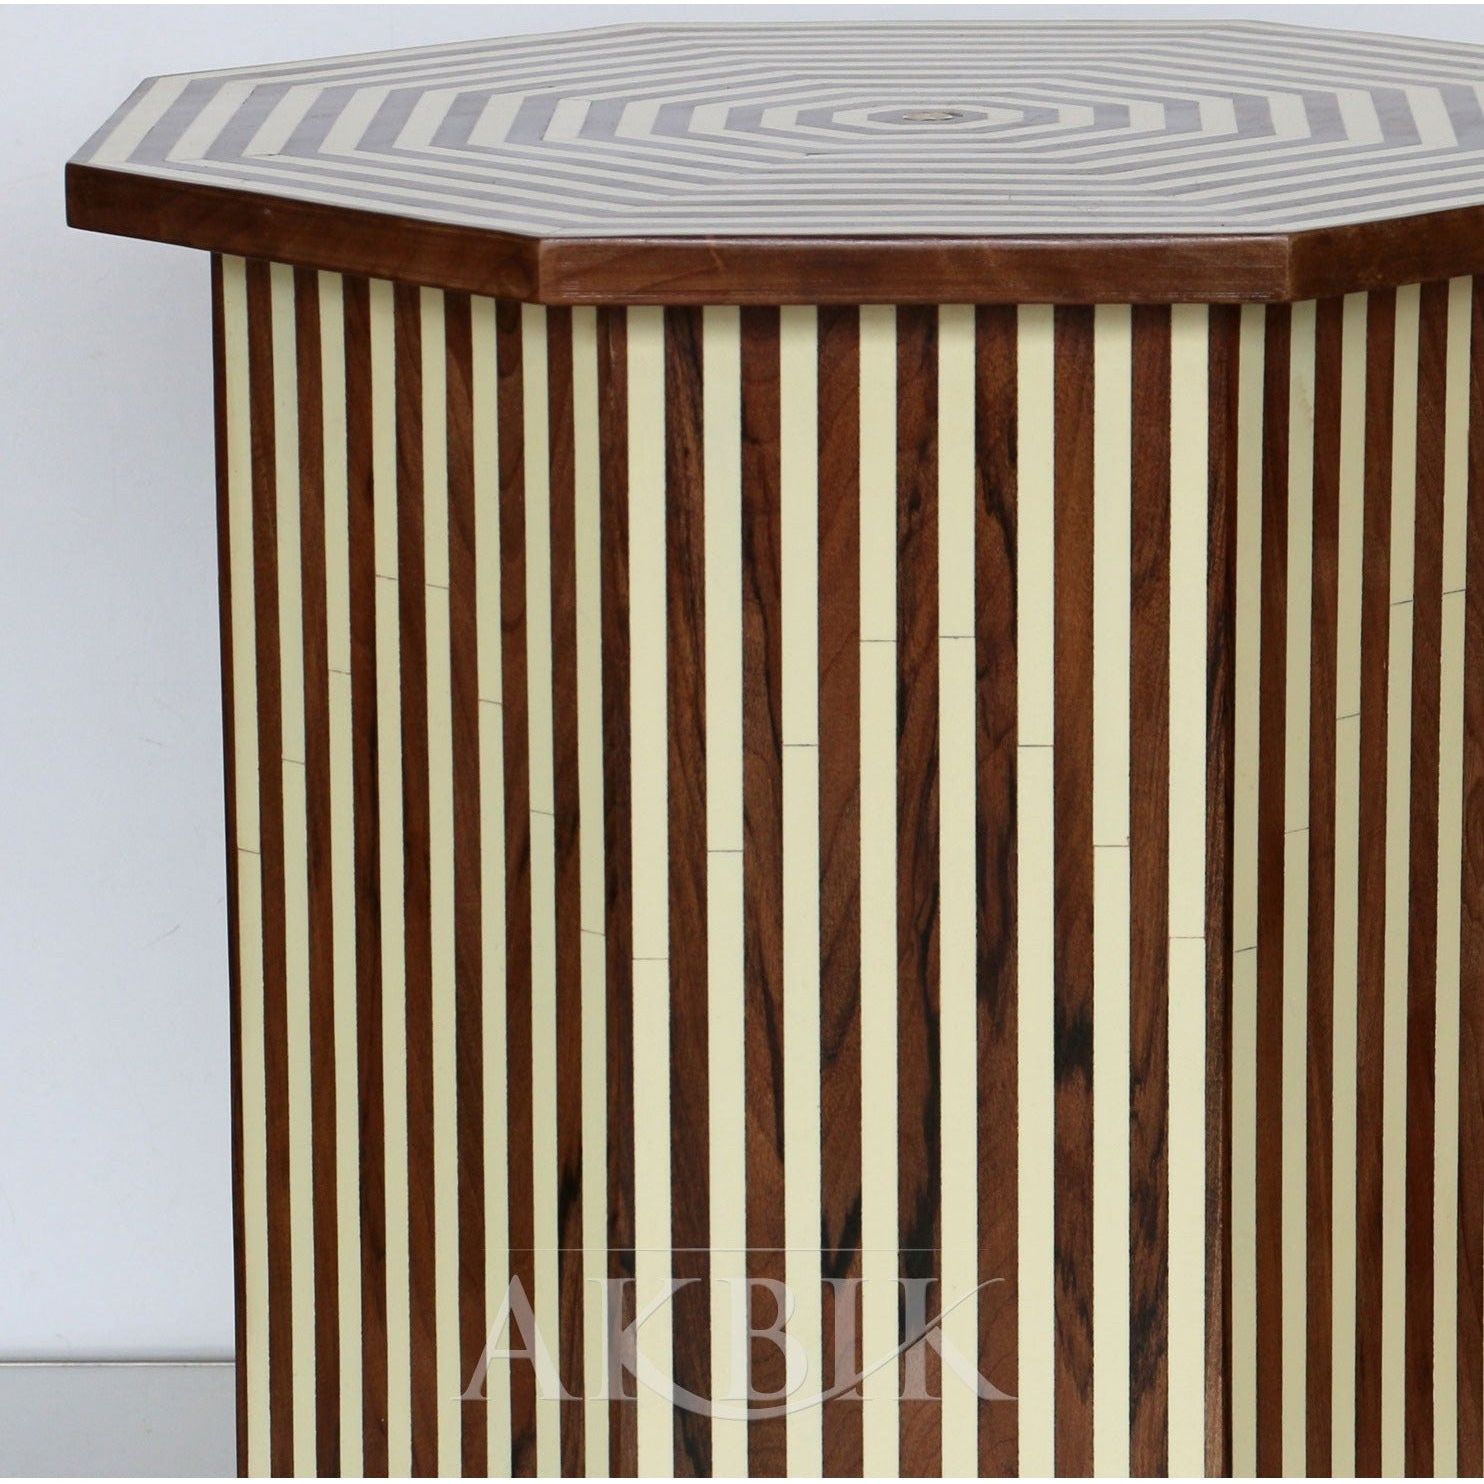 INLAID SIDE TABLE - AKBIK Furniture & Design